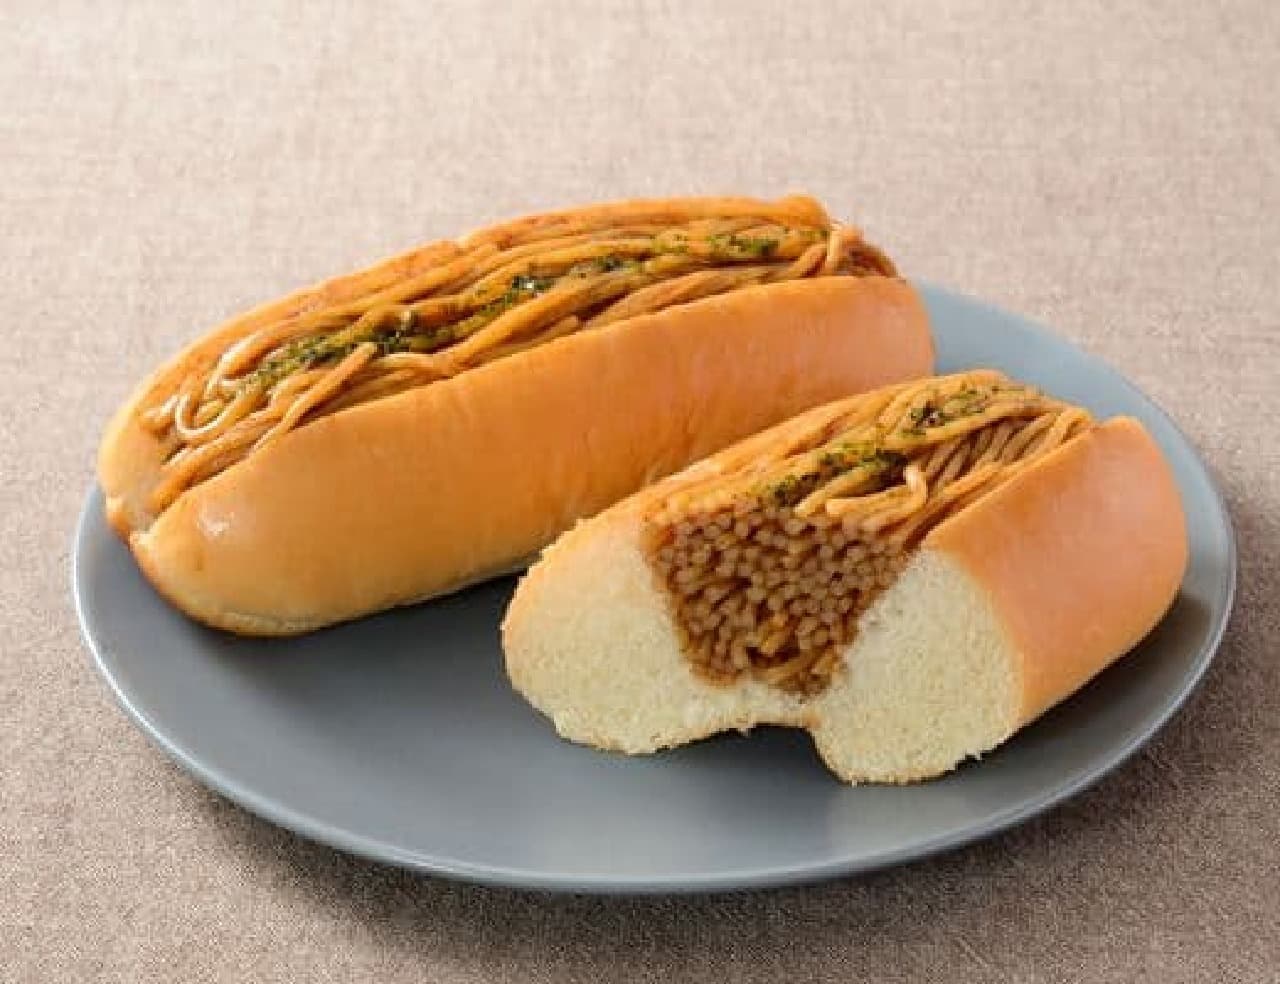 LAWSON "Kodawari no Yakisoba Bread